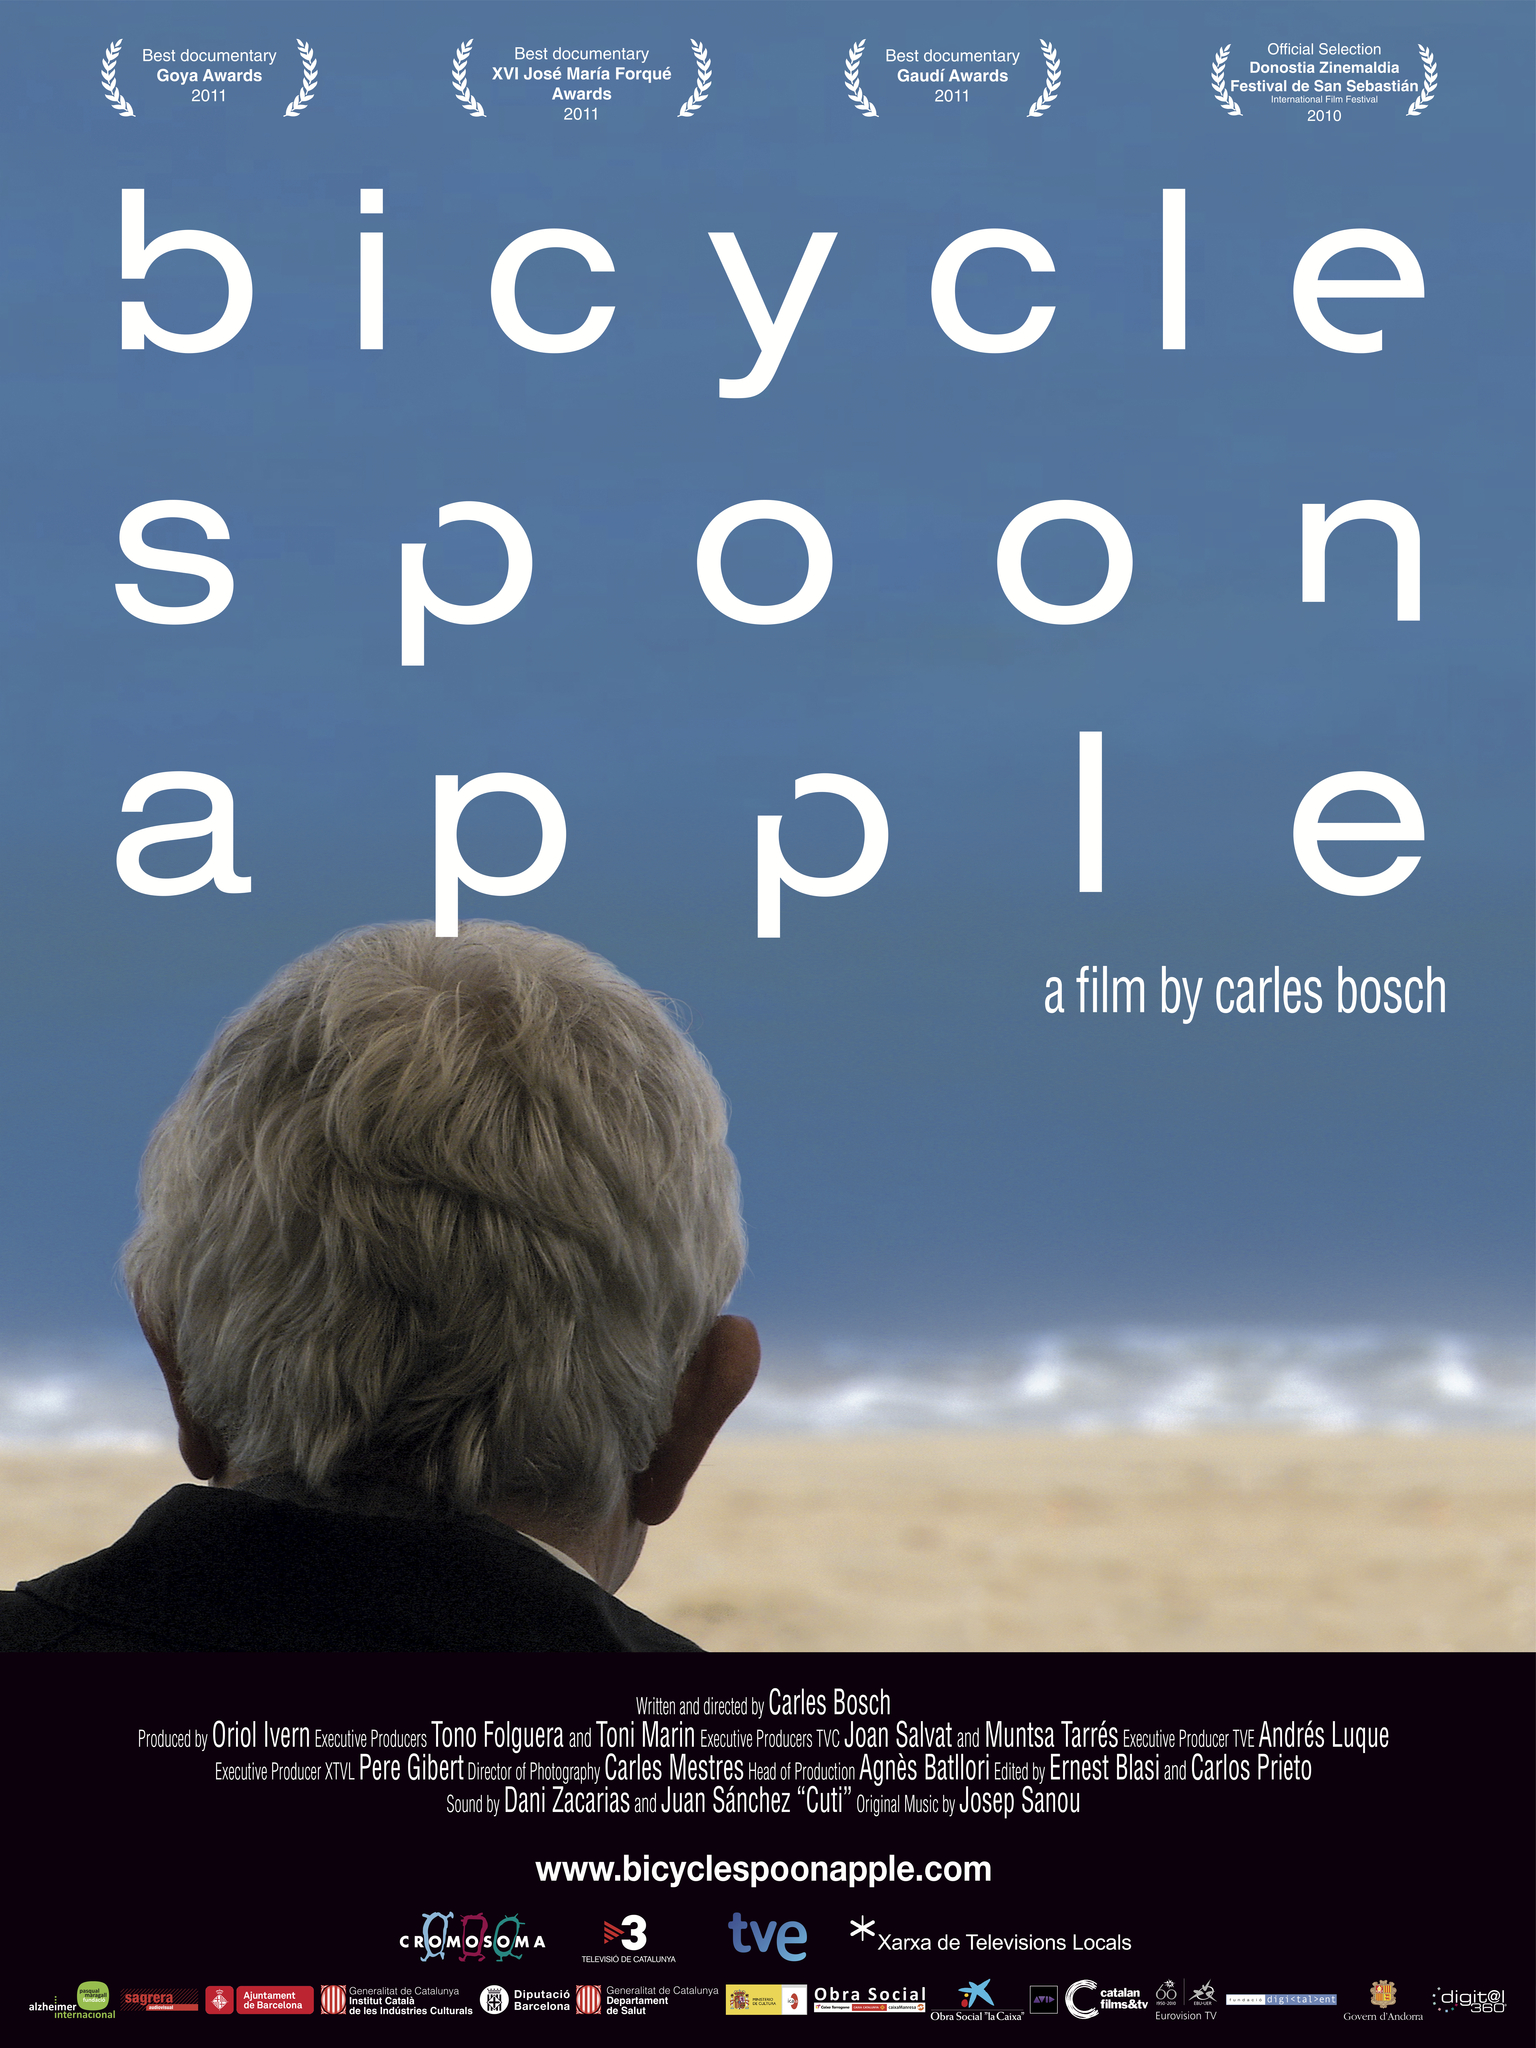 Bicicleta, cullera, poma